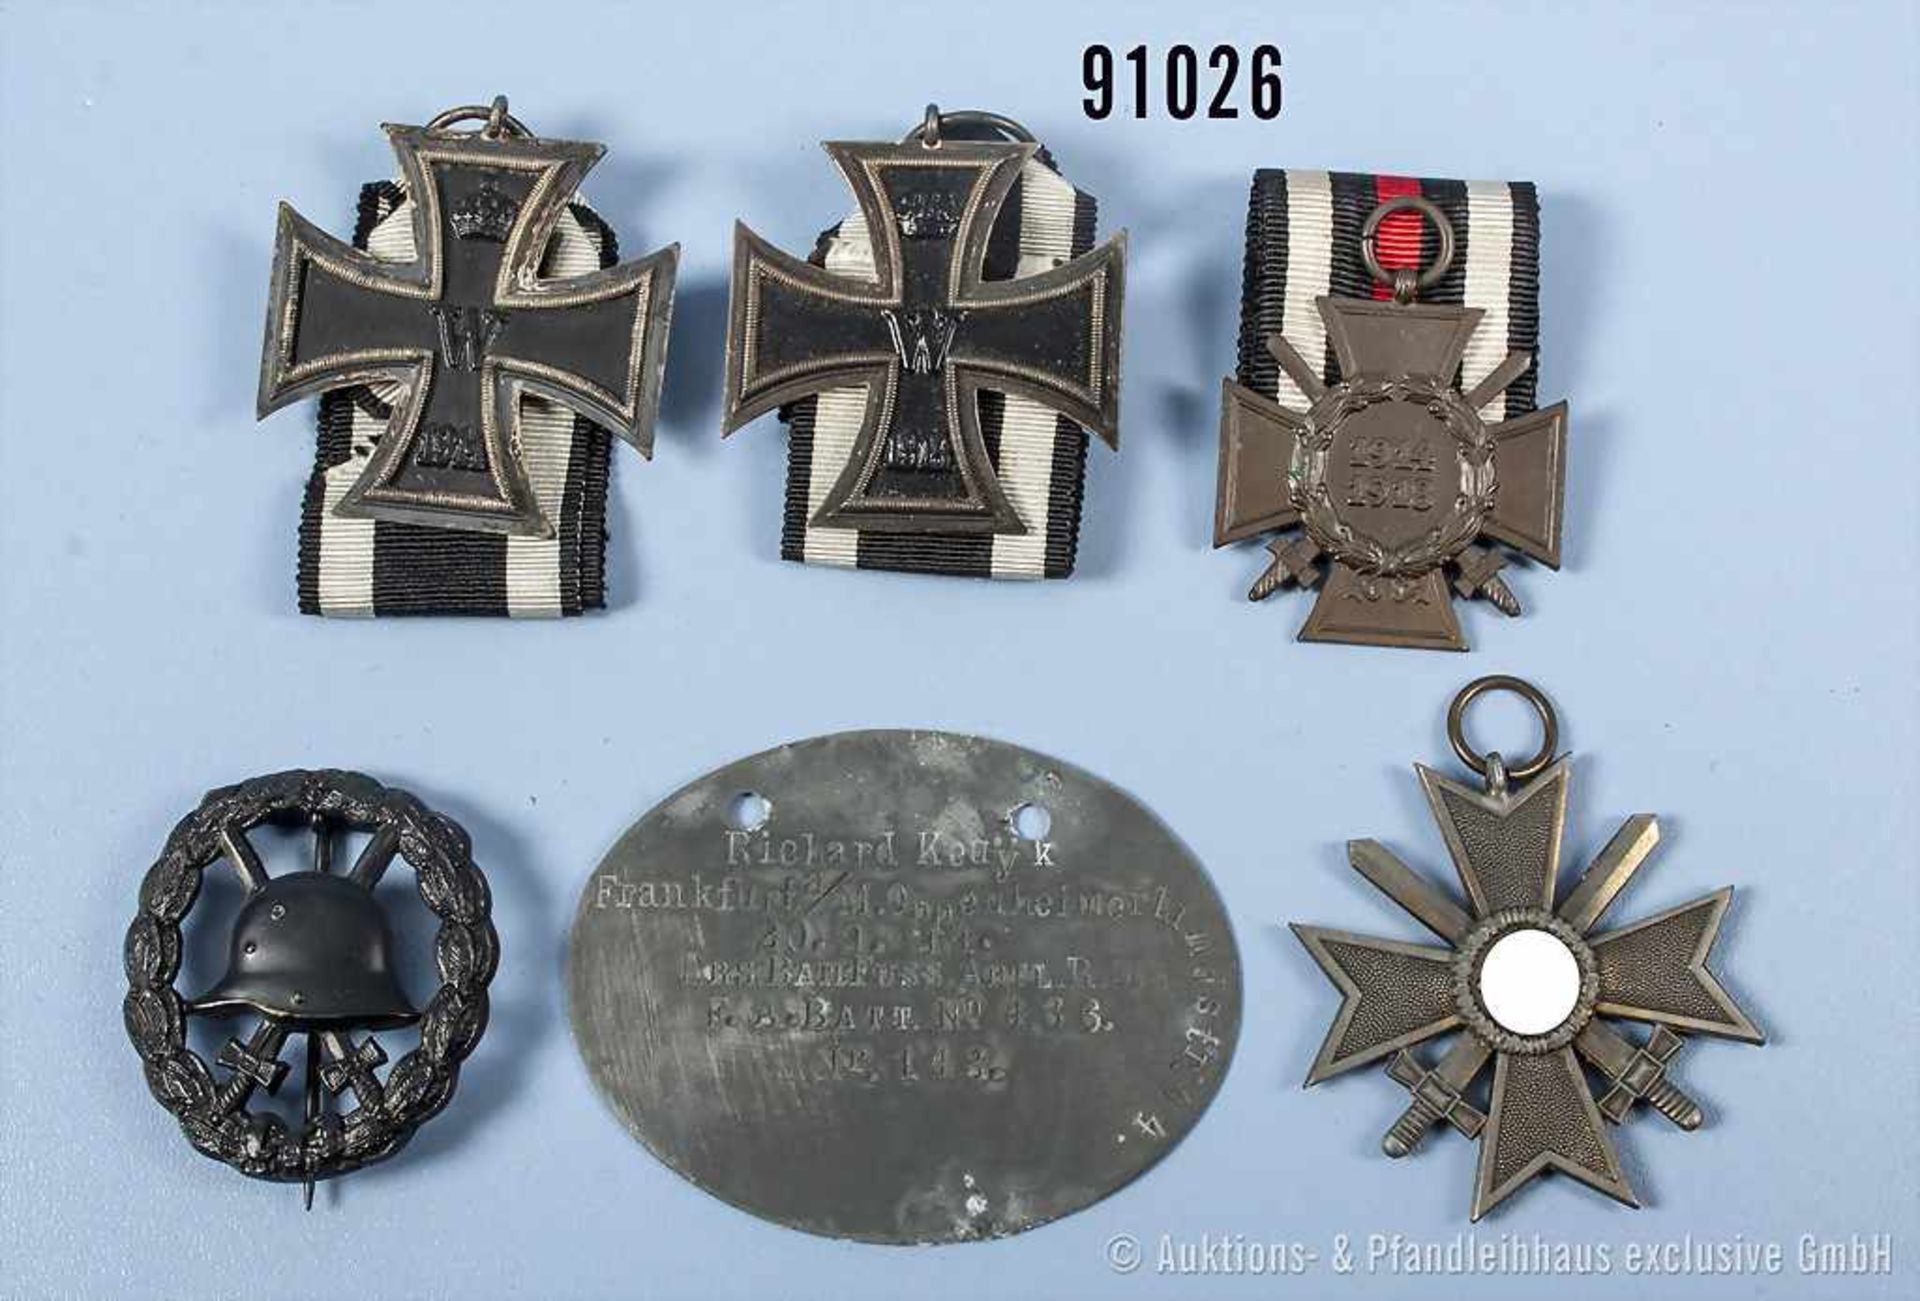 Konv. 2 EK 2 1914, durchbrochenes VWA in Schwarz, EKF, KVK 2. Klasse mit Schwertern sowie